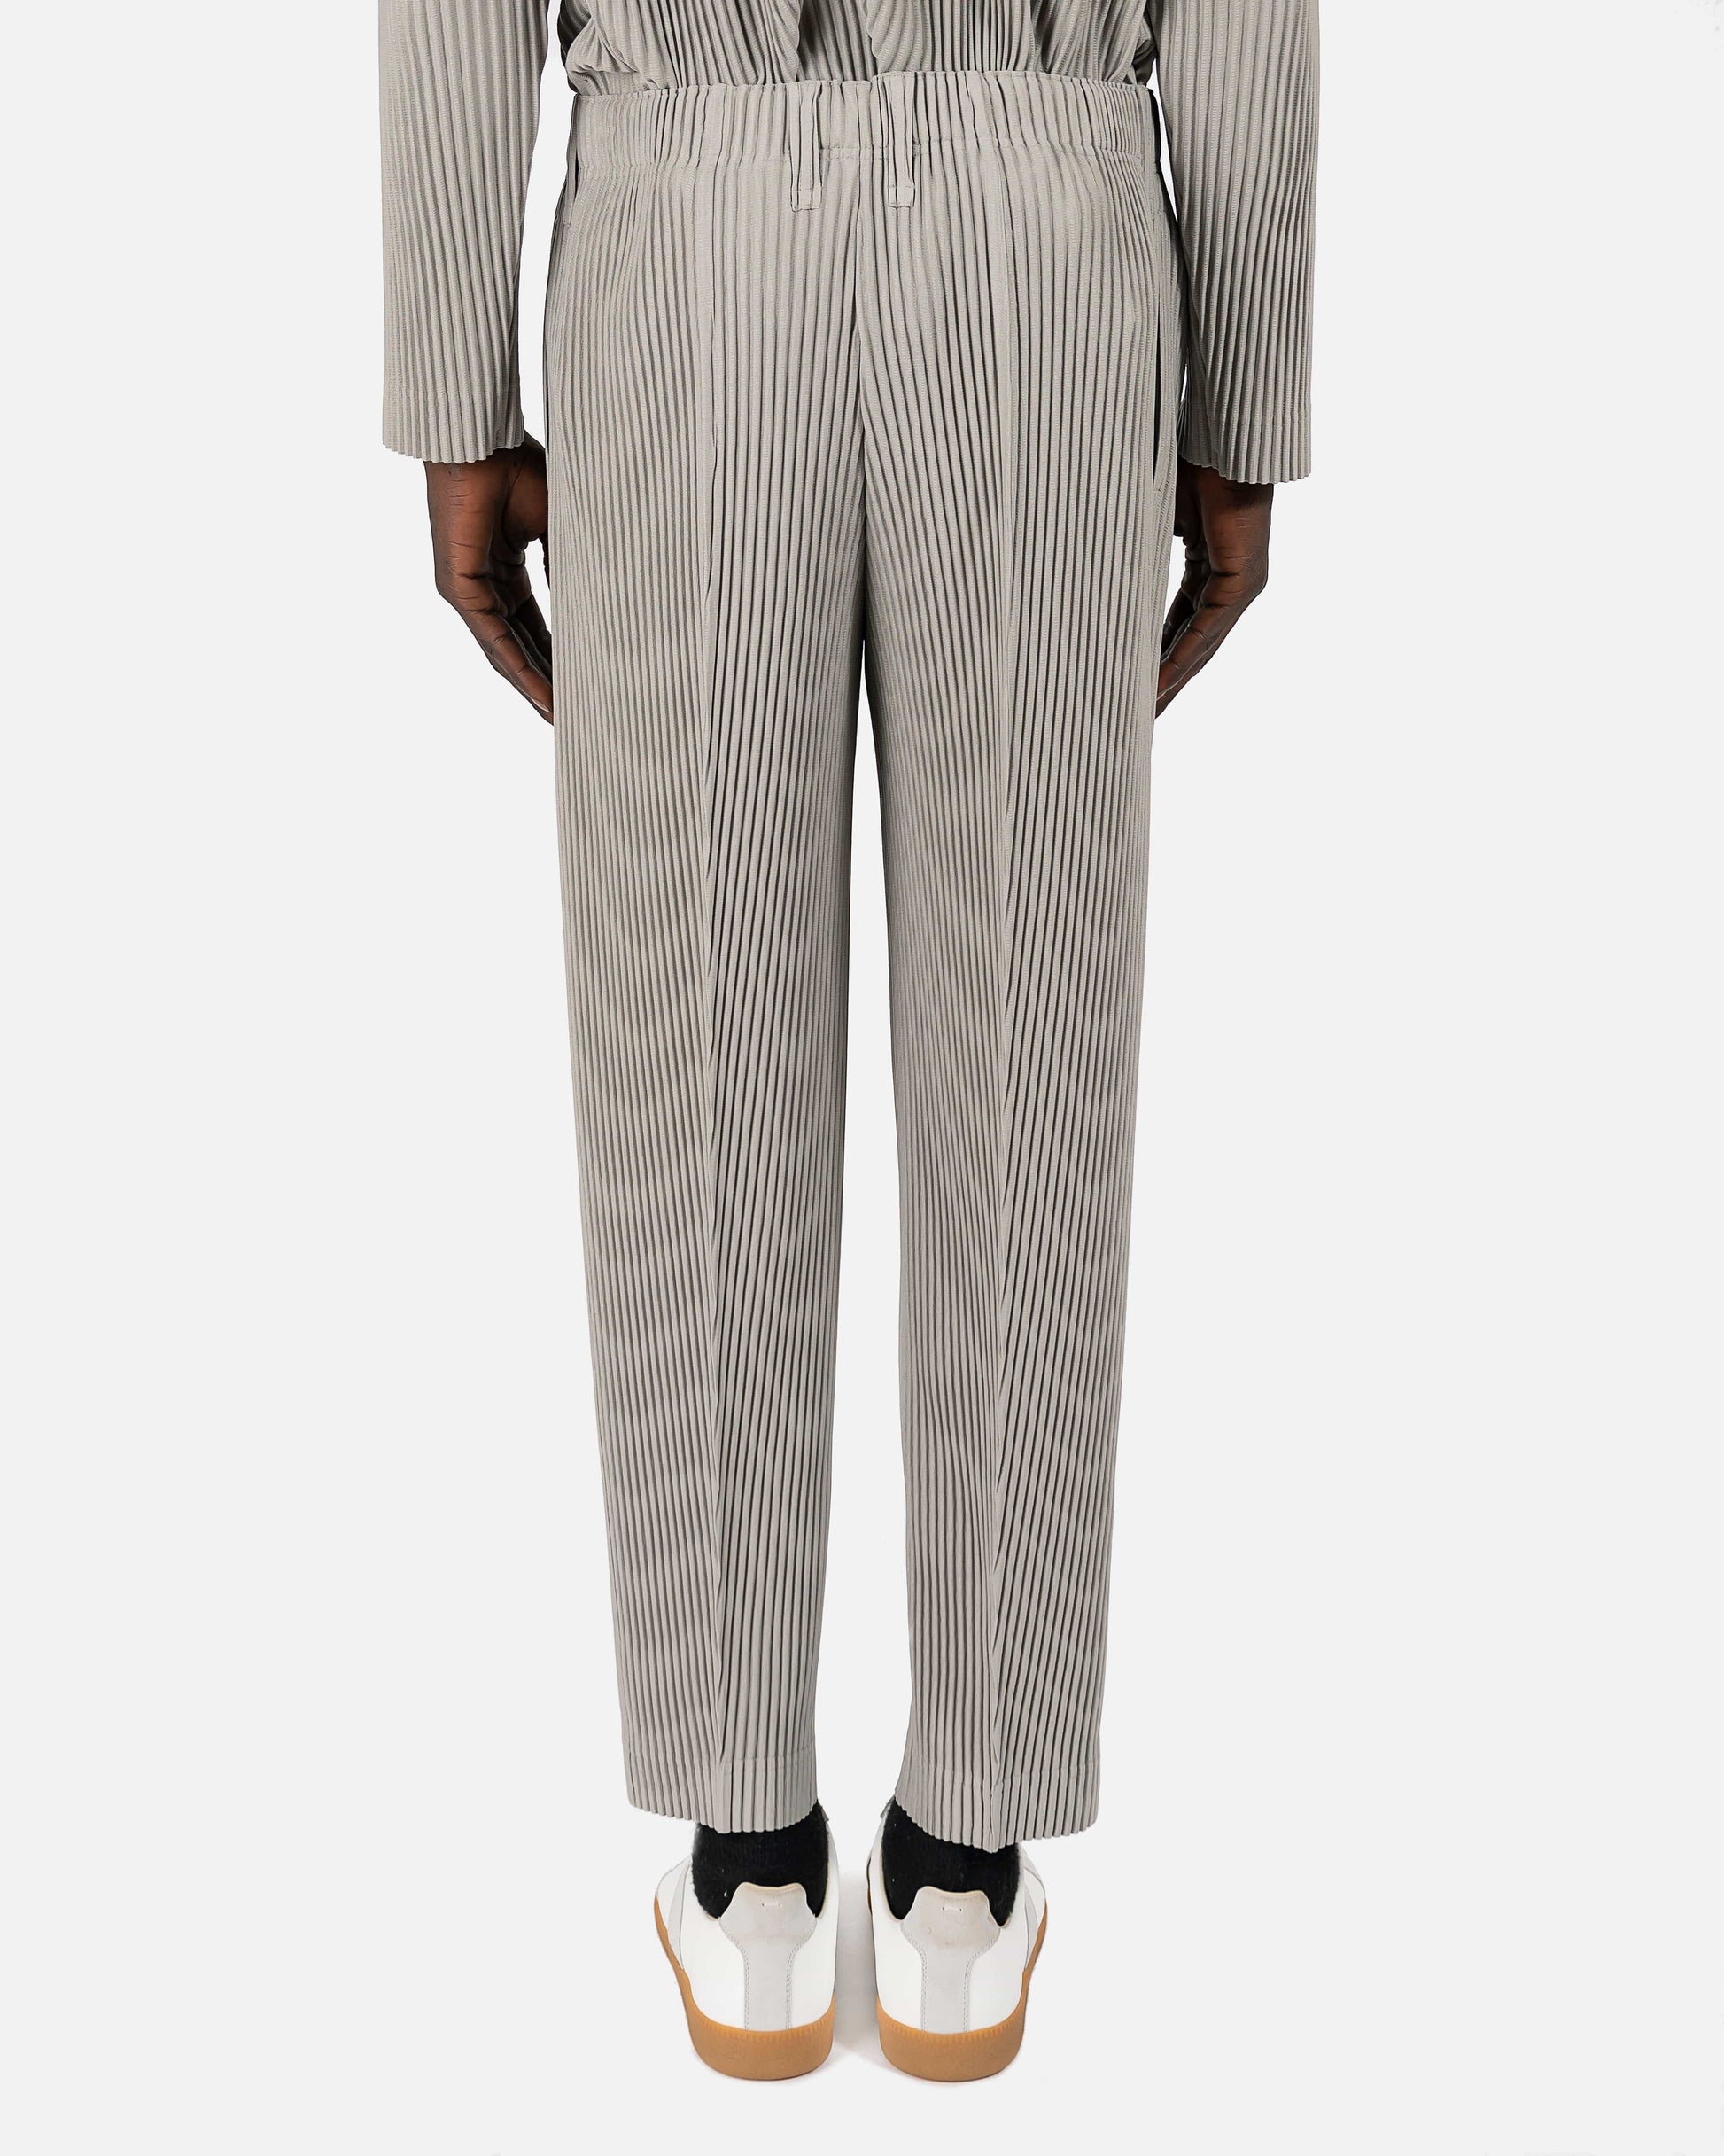 Homme Plissé Issey Miyake Men's Pants Tailored Pleats 1 Pants in Silver Grey